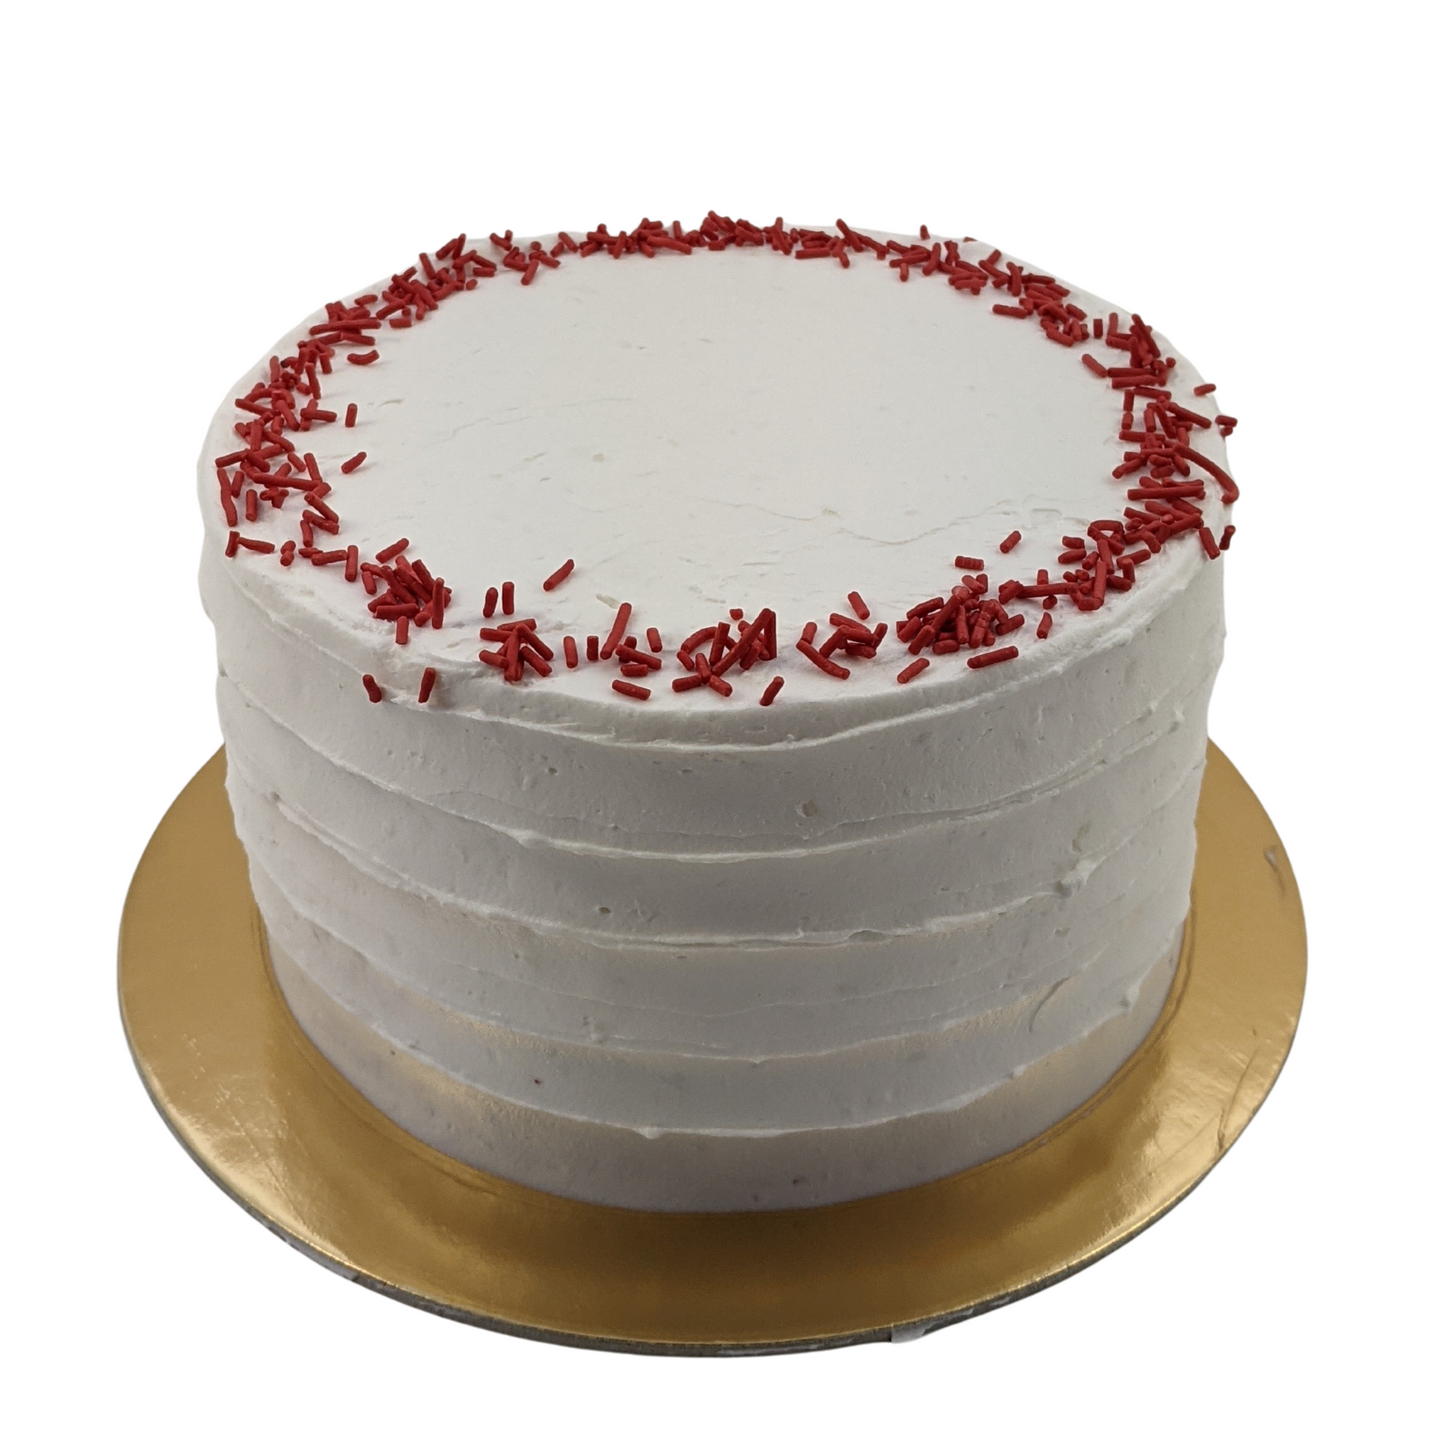 Classic Red Velvet Cake - Cocoabeans Gluten-Free